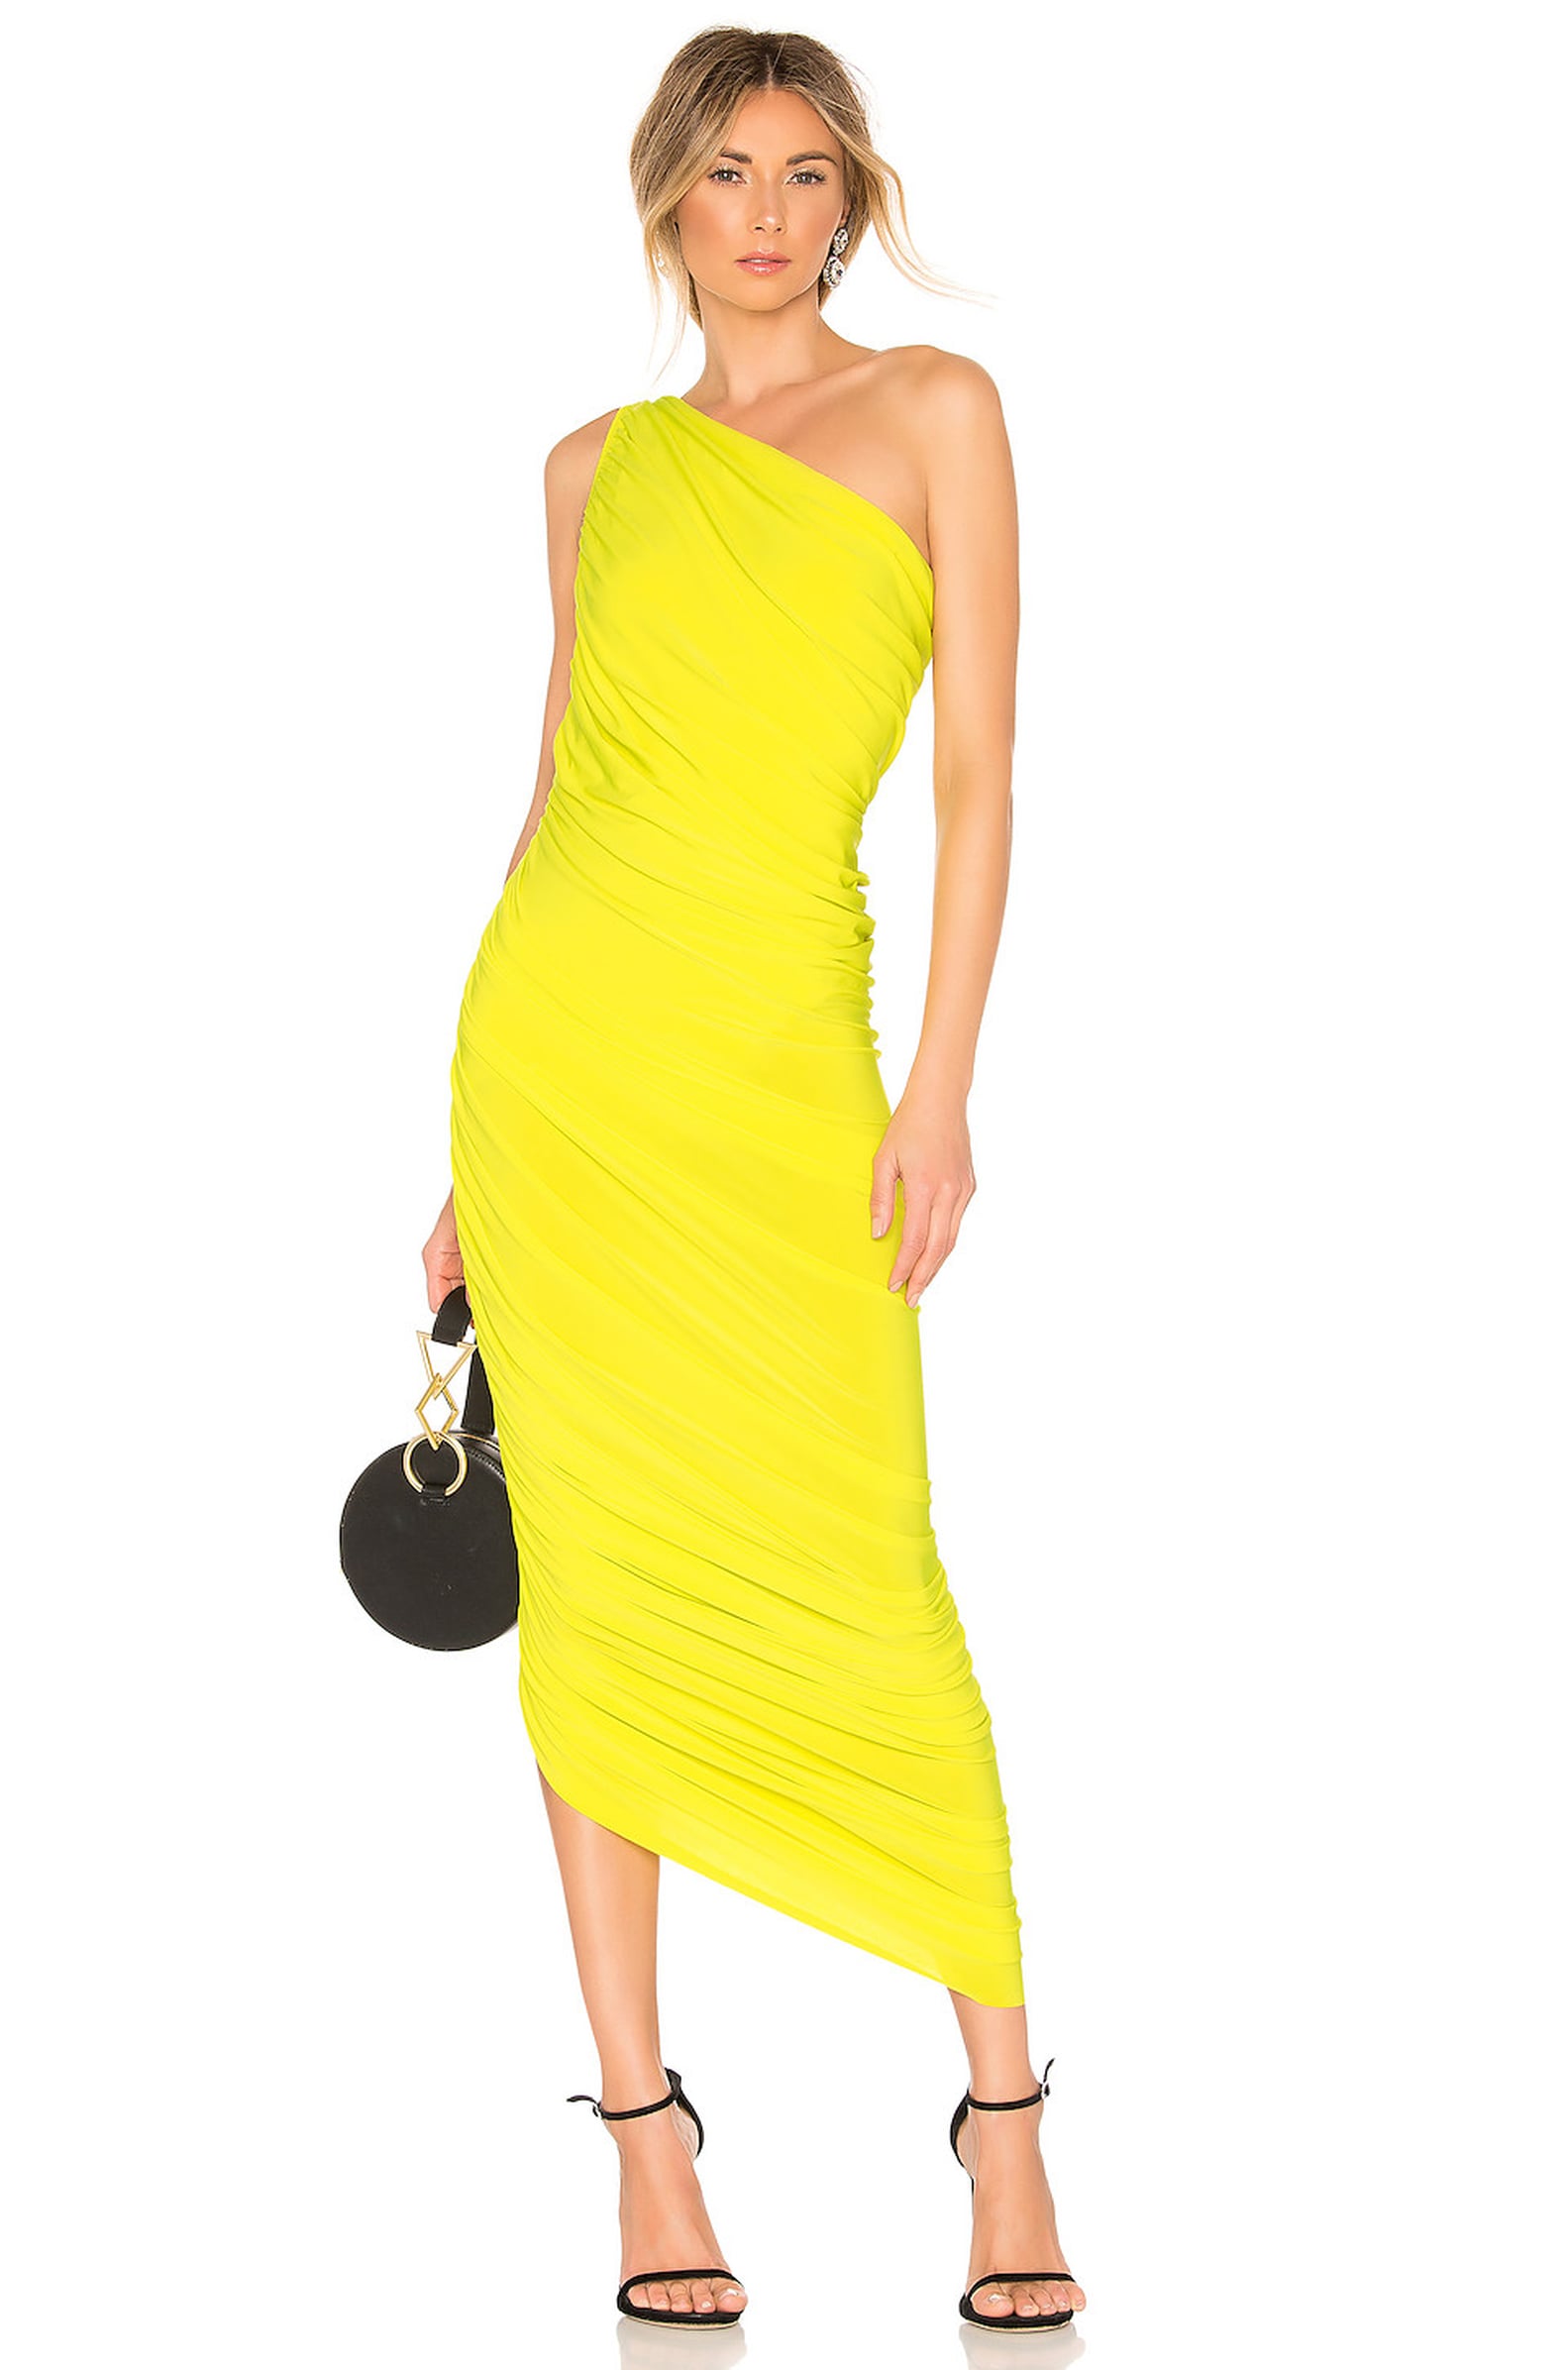 Michelle Obama's Sparkling Yellow Schiaparelli Gown | POPSUGAR Fashion